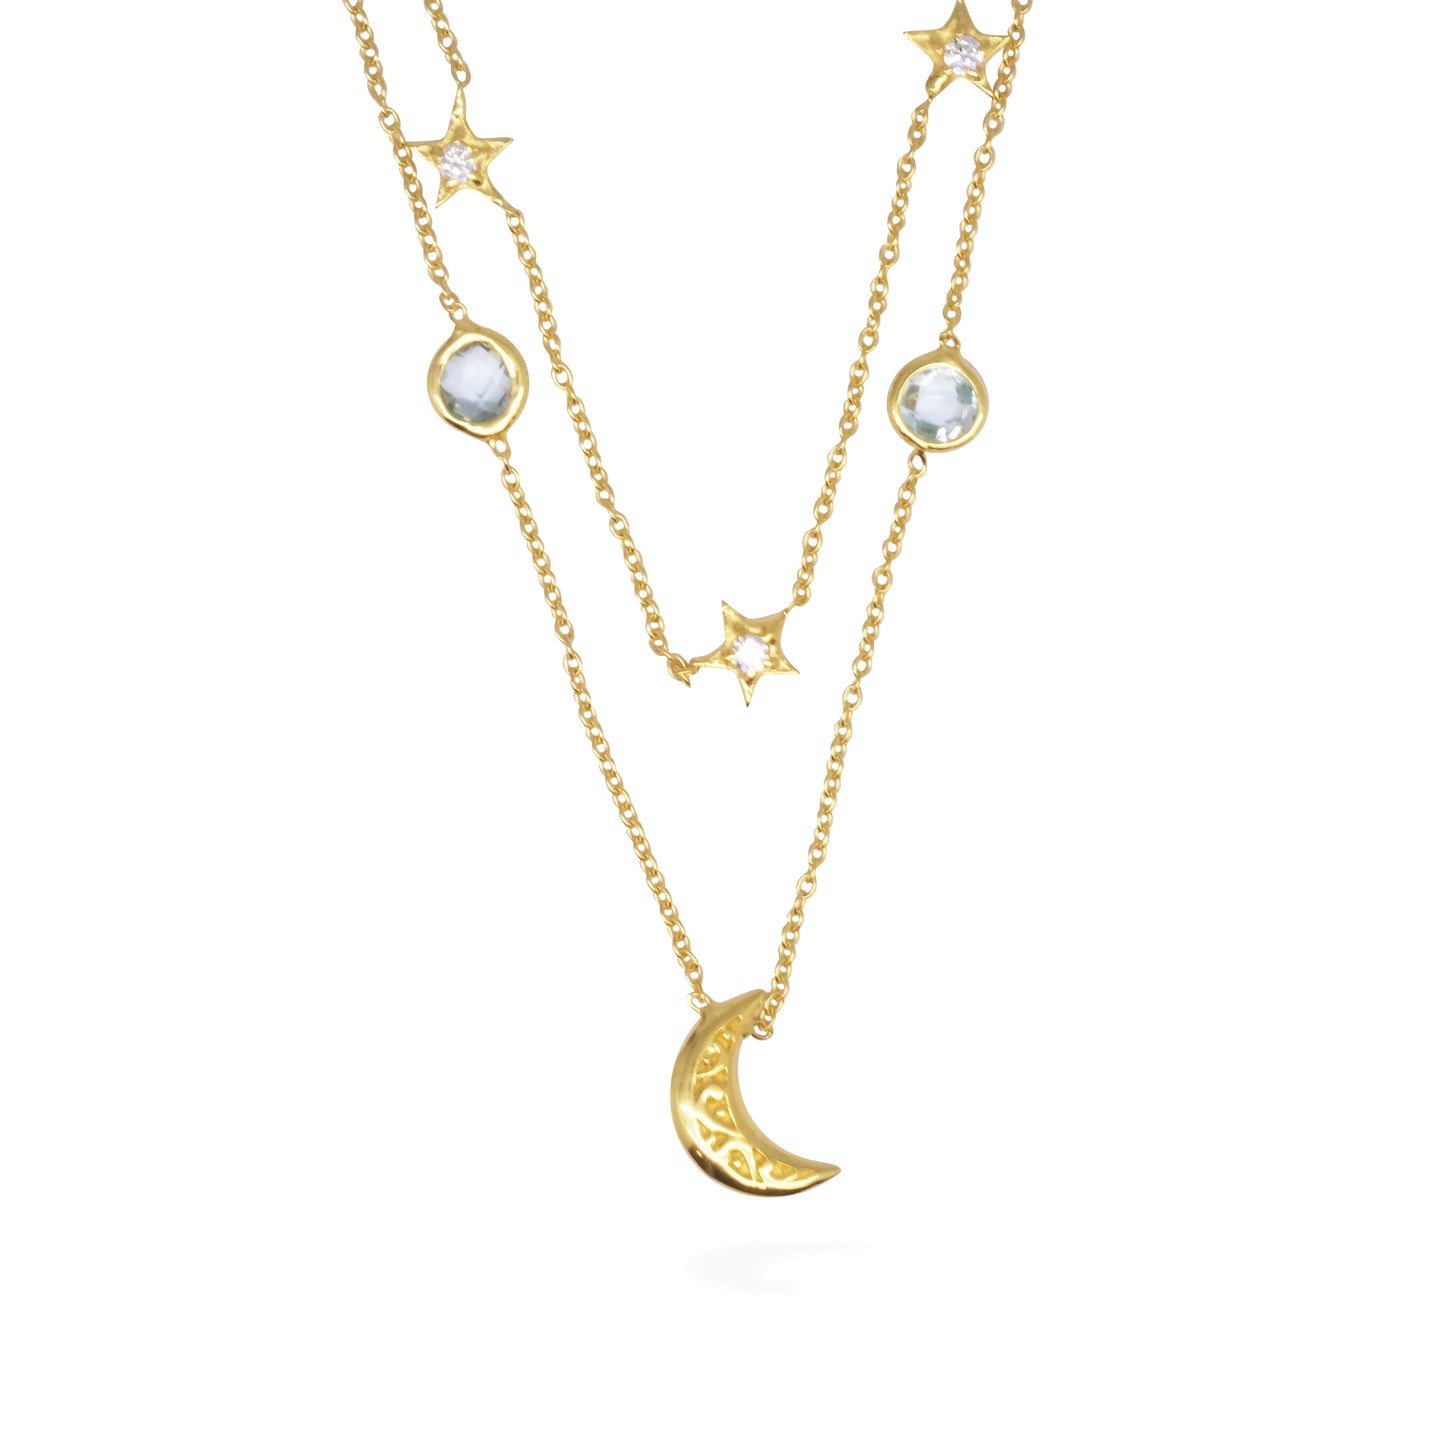 Stellar necklet: Celestial 18k gold moon necklace